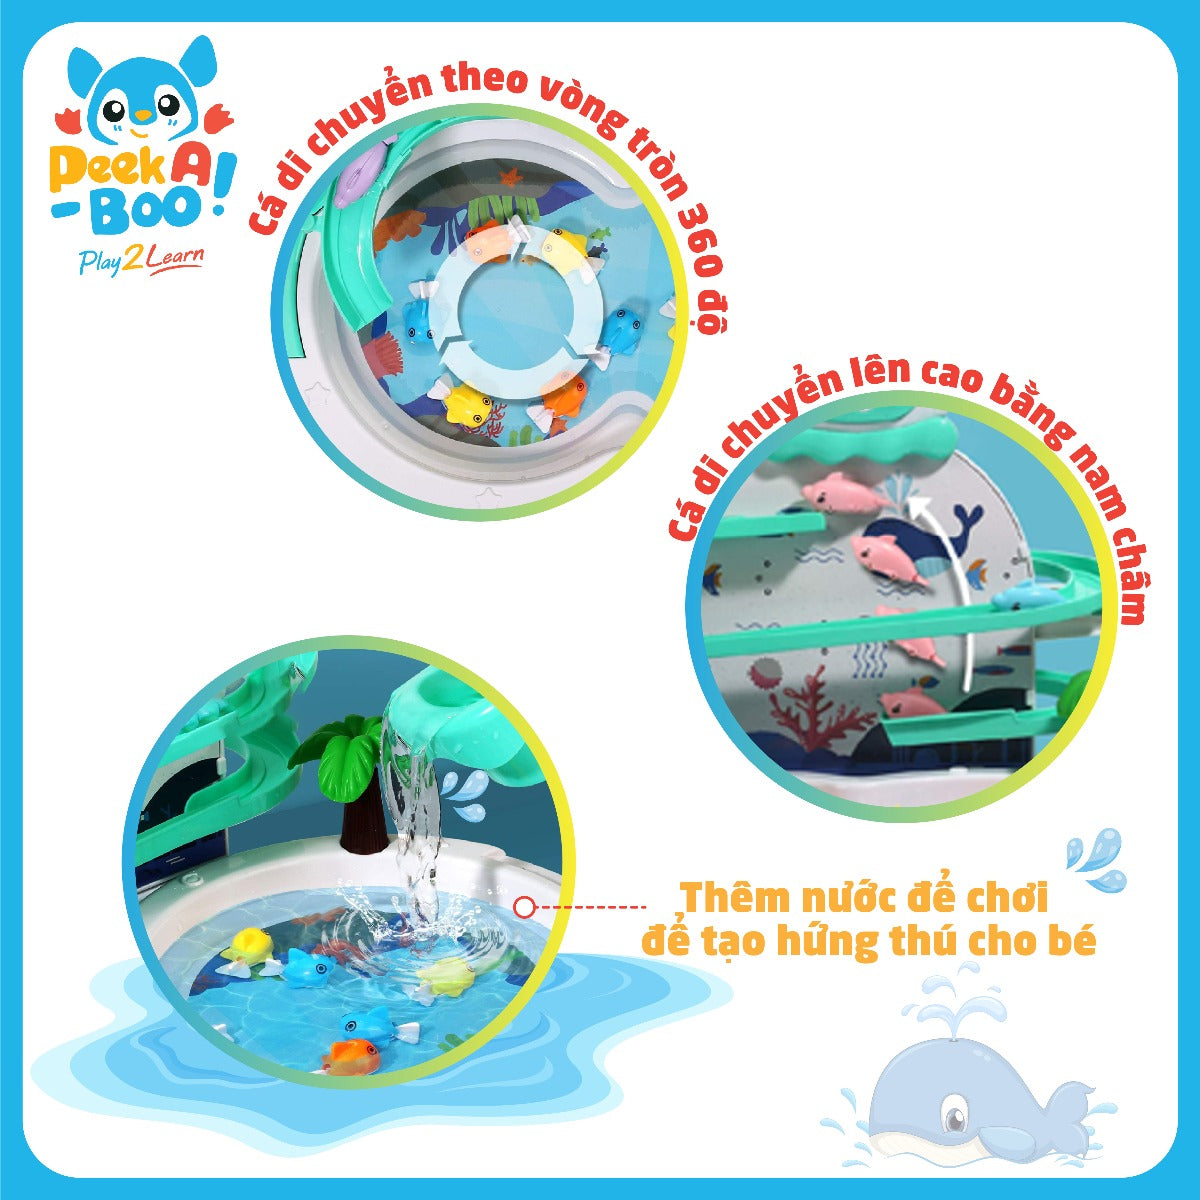 Fishing toy - Funny flying dolphin PEEK A BOO PAB027